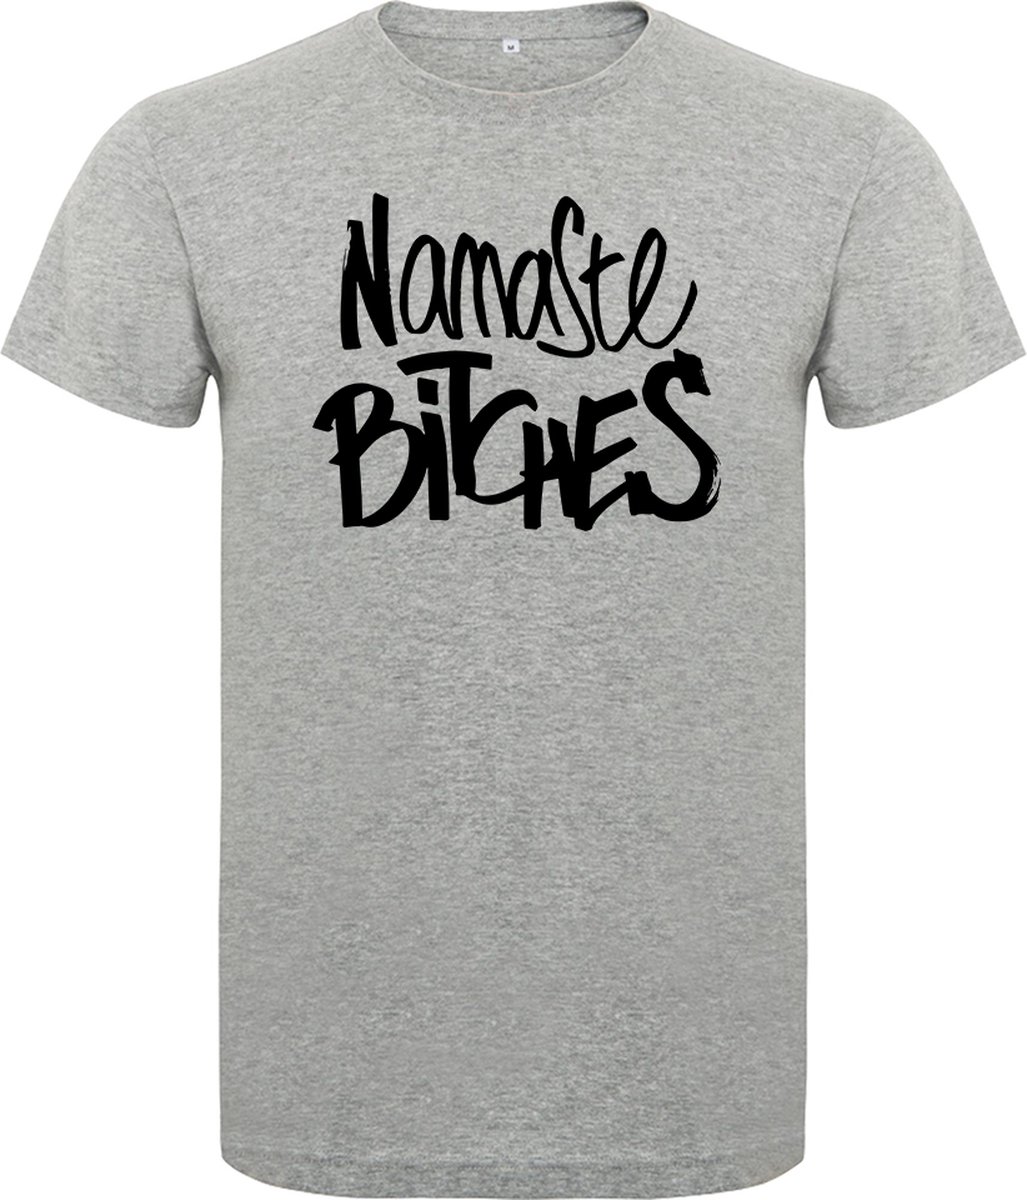 T-Shirt - Casual T-Shirt - Fun T-Shirt - Fun Tekst - Lifestyle T-Shirt - Grappig - Mood - Sport - Yoga - Relax - Vibe - Namaste Bitches - Maat XS